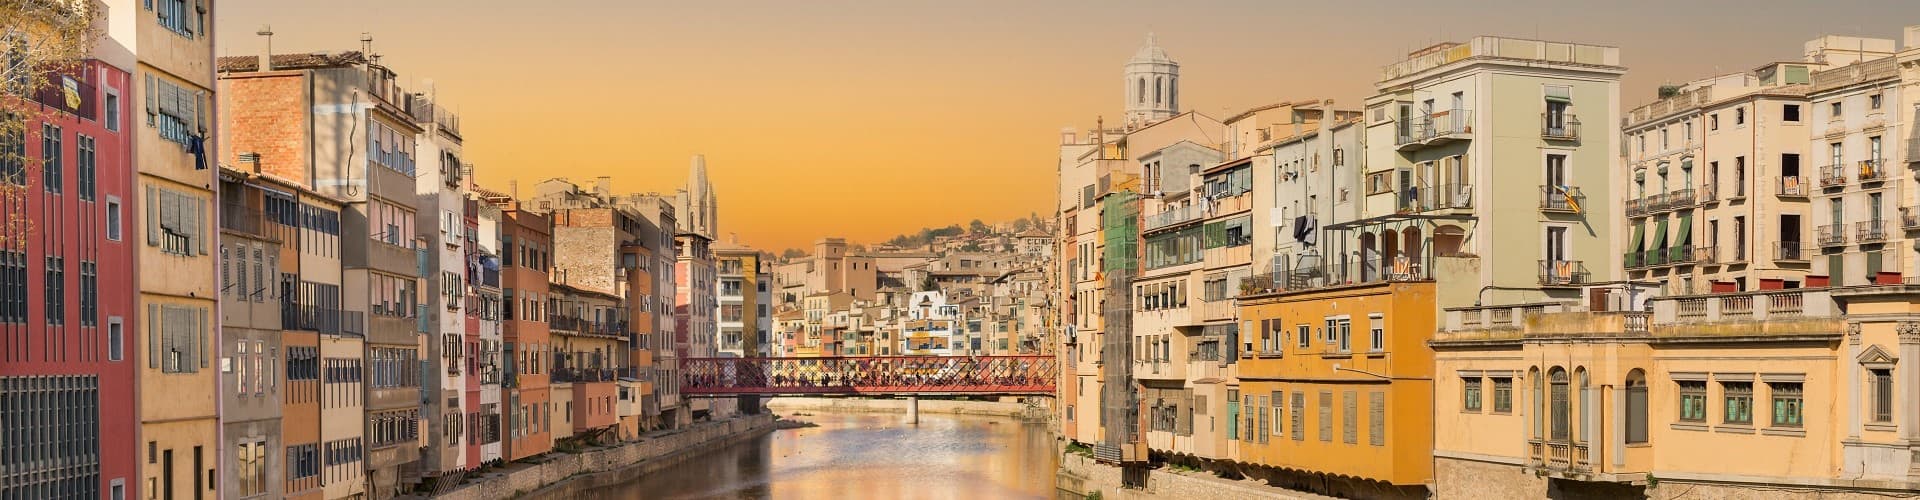 Essential Free Tour Girona Banner